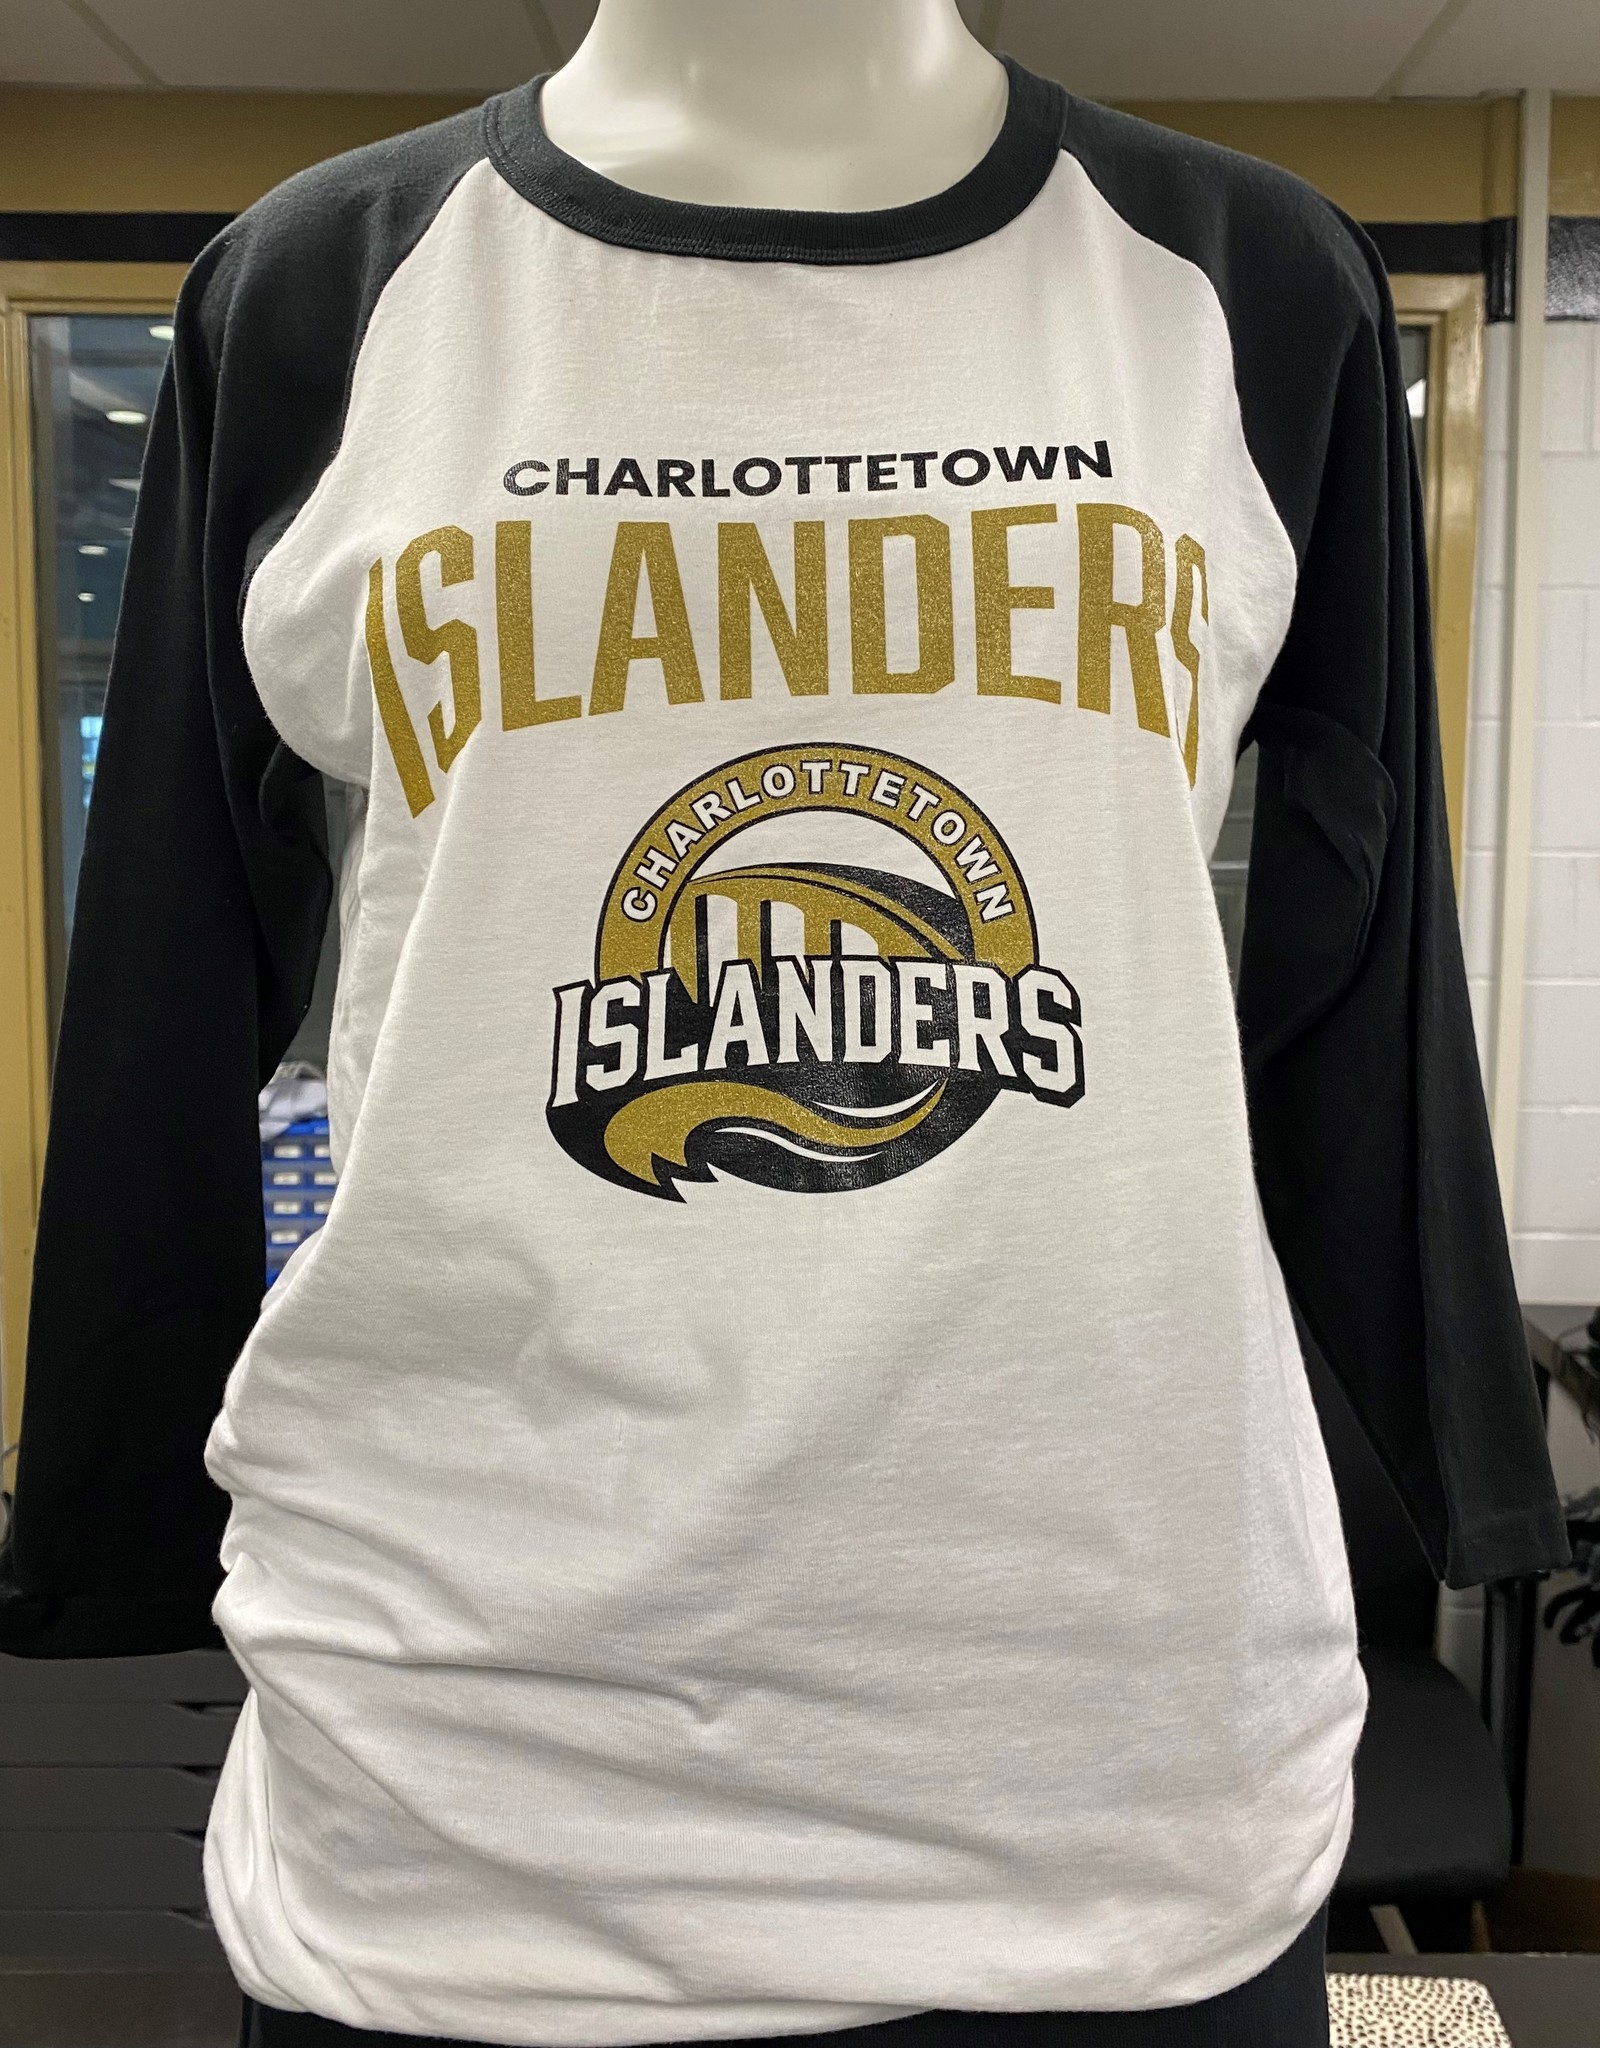 M&O 3/4 Sleeve Baseball Shirt - Charlottetown Islanders